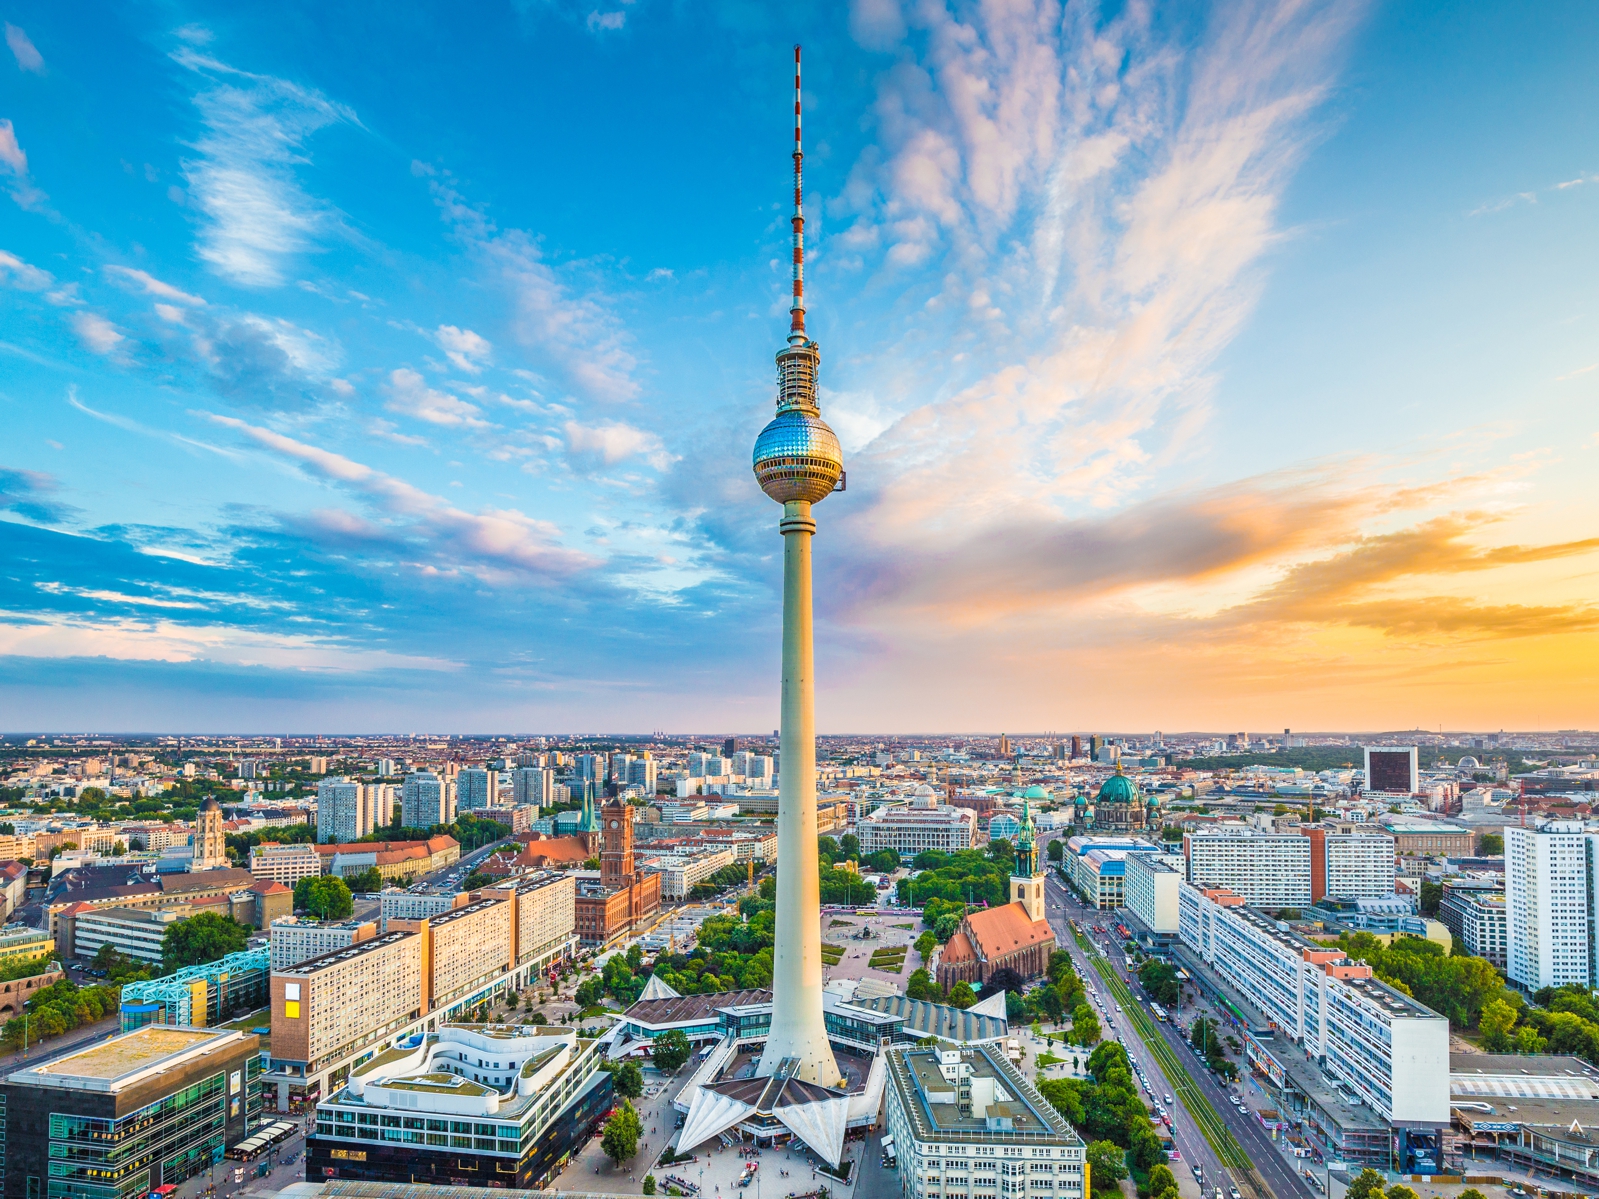 Vlies Tapete XXL Poster Fototapete Berlin Skyline Fernsehturm